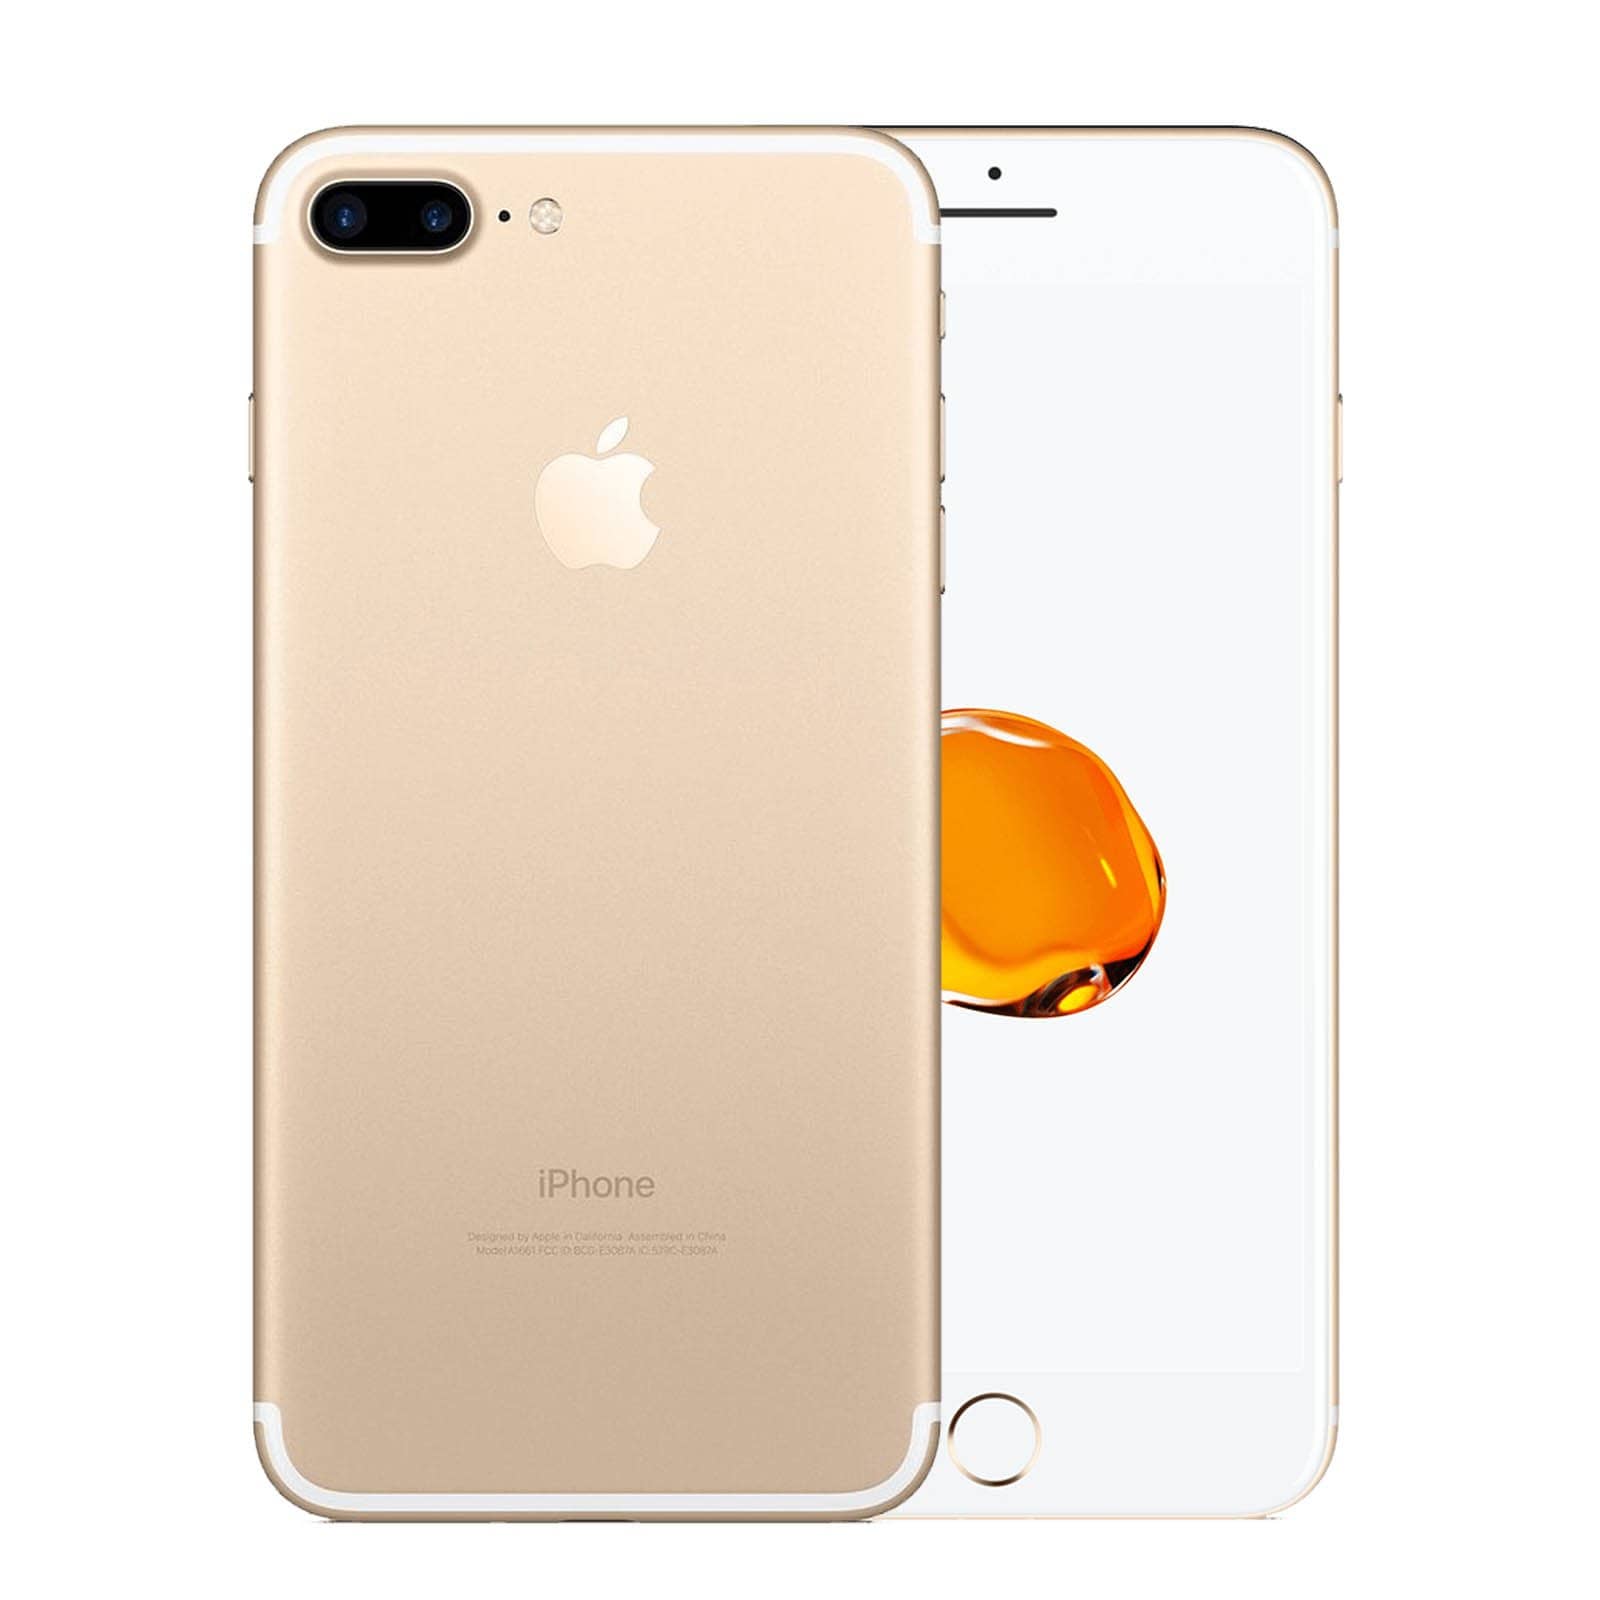 Apple iPhone 7 Plus 128GB Gold Very Good - Unlocked 128GB Gold Very Good